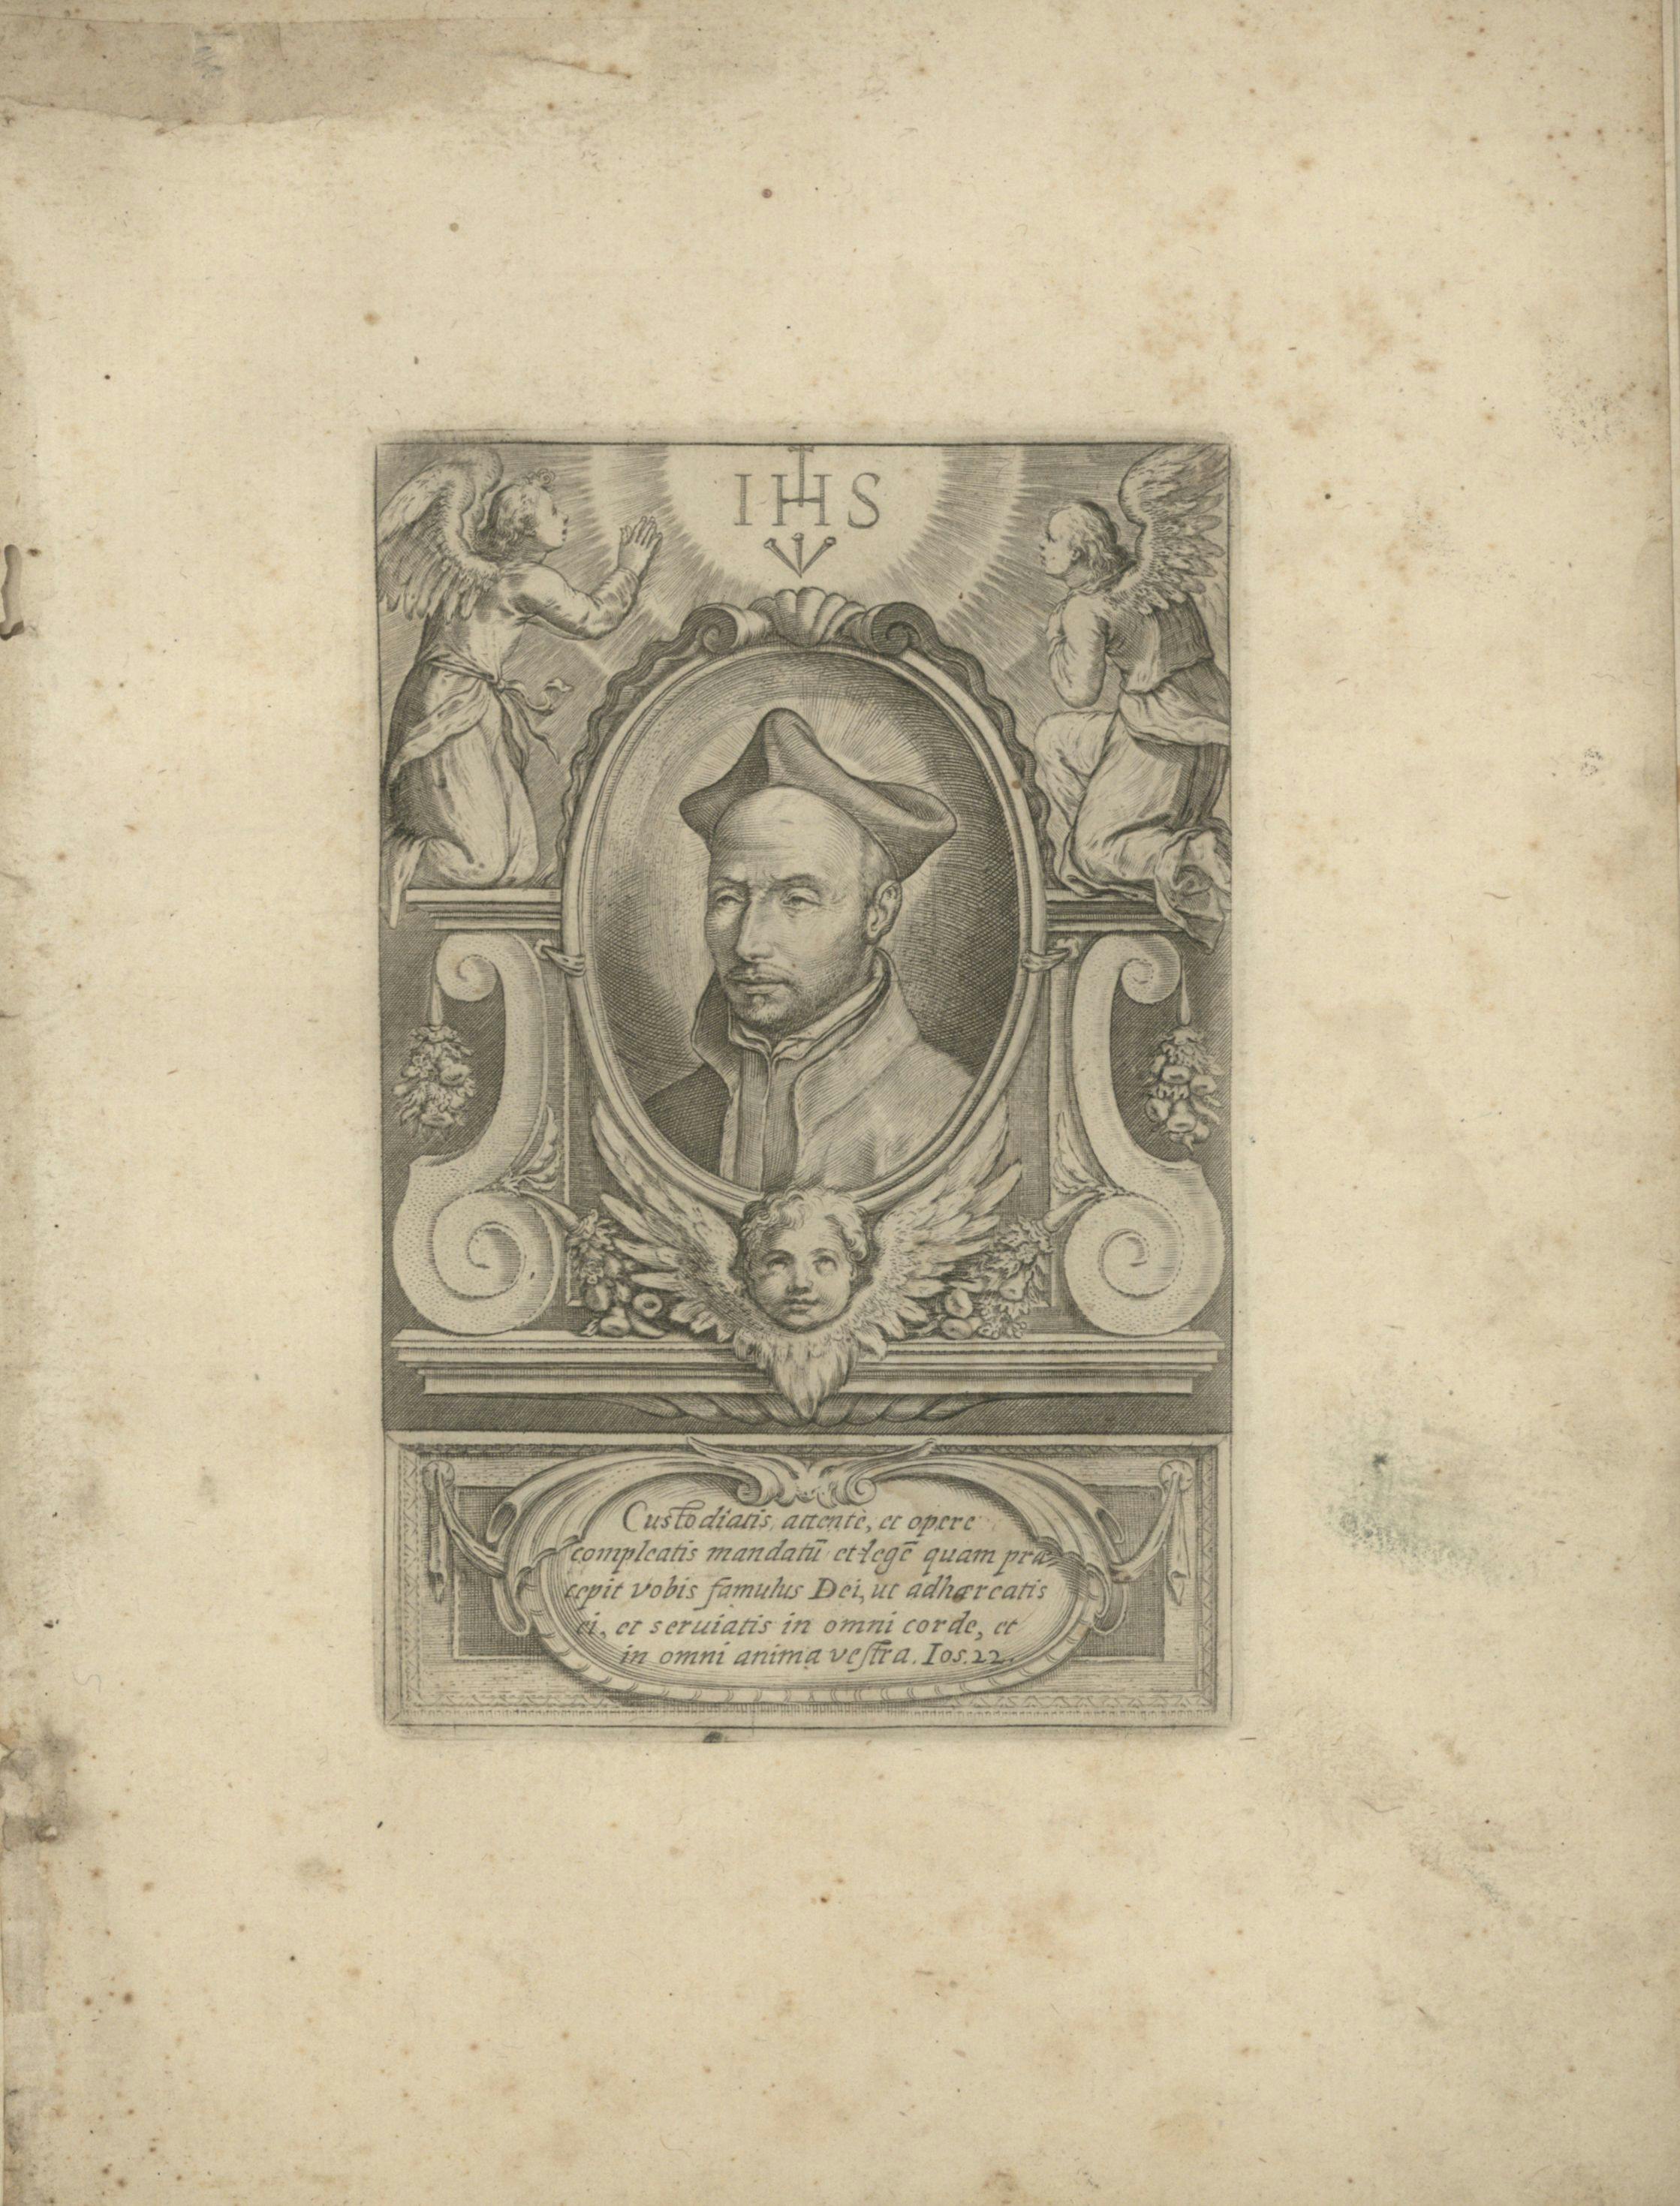 De vita et morib. Ignatii Loiolae, by Giovanni Pietro Maffei (1536? – 1603), Romae: Apud Franciscum Zannettum 1585